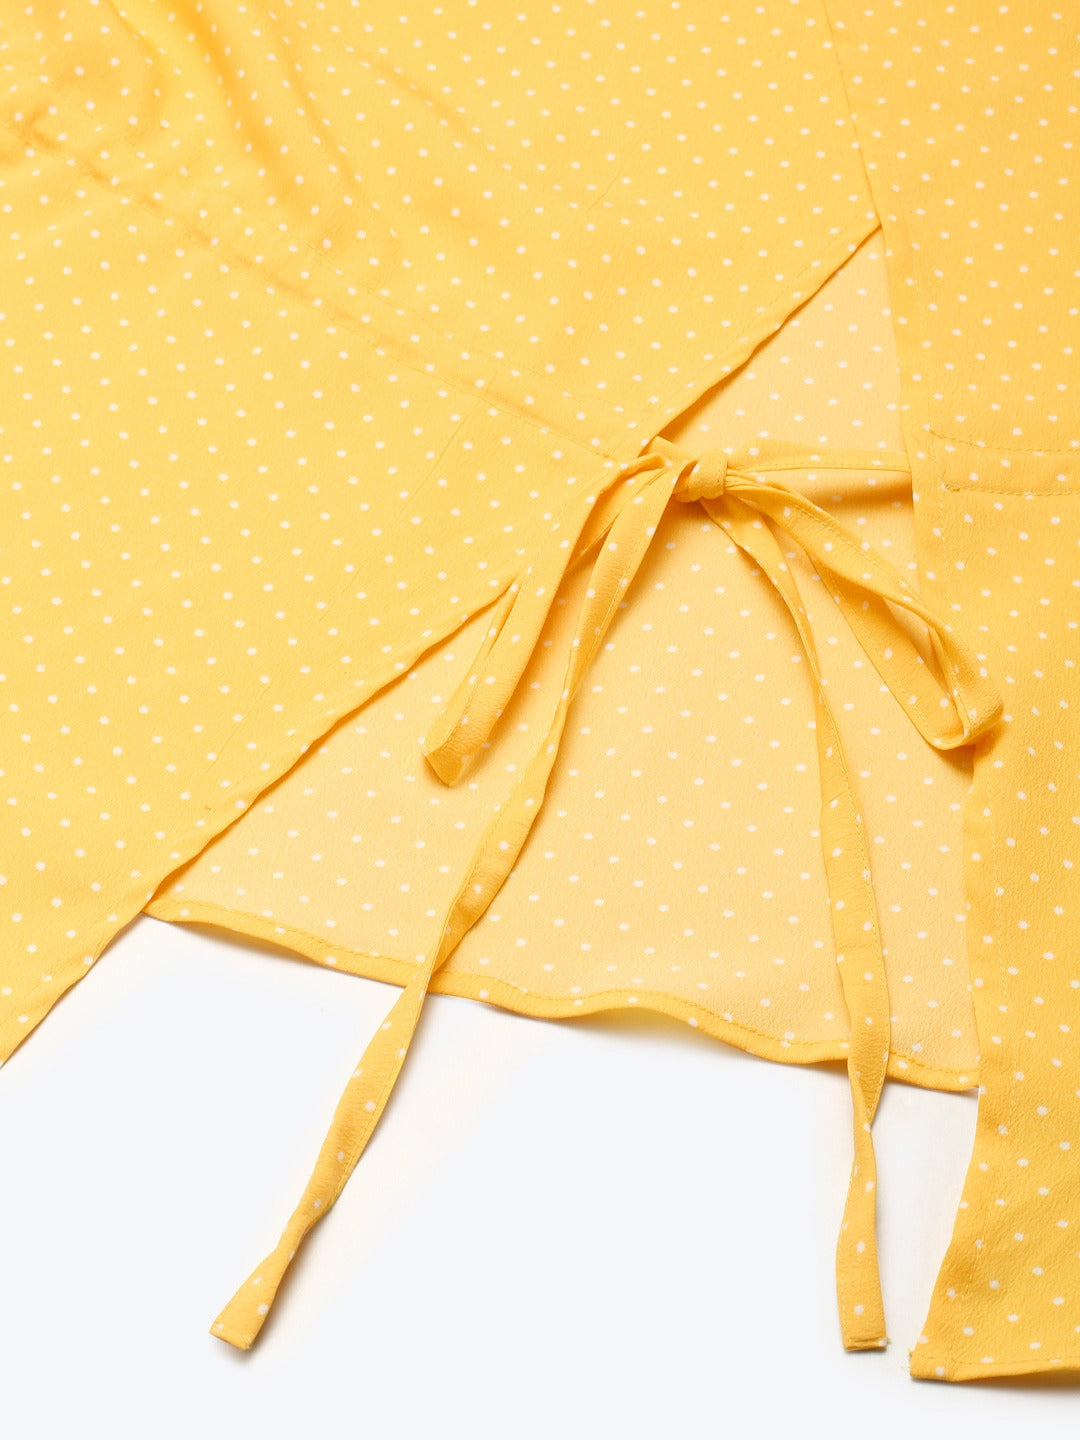 Women Yellow Pin Dots Back Tie-Up Top